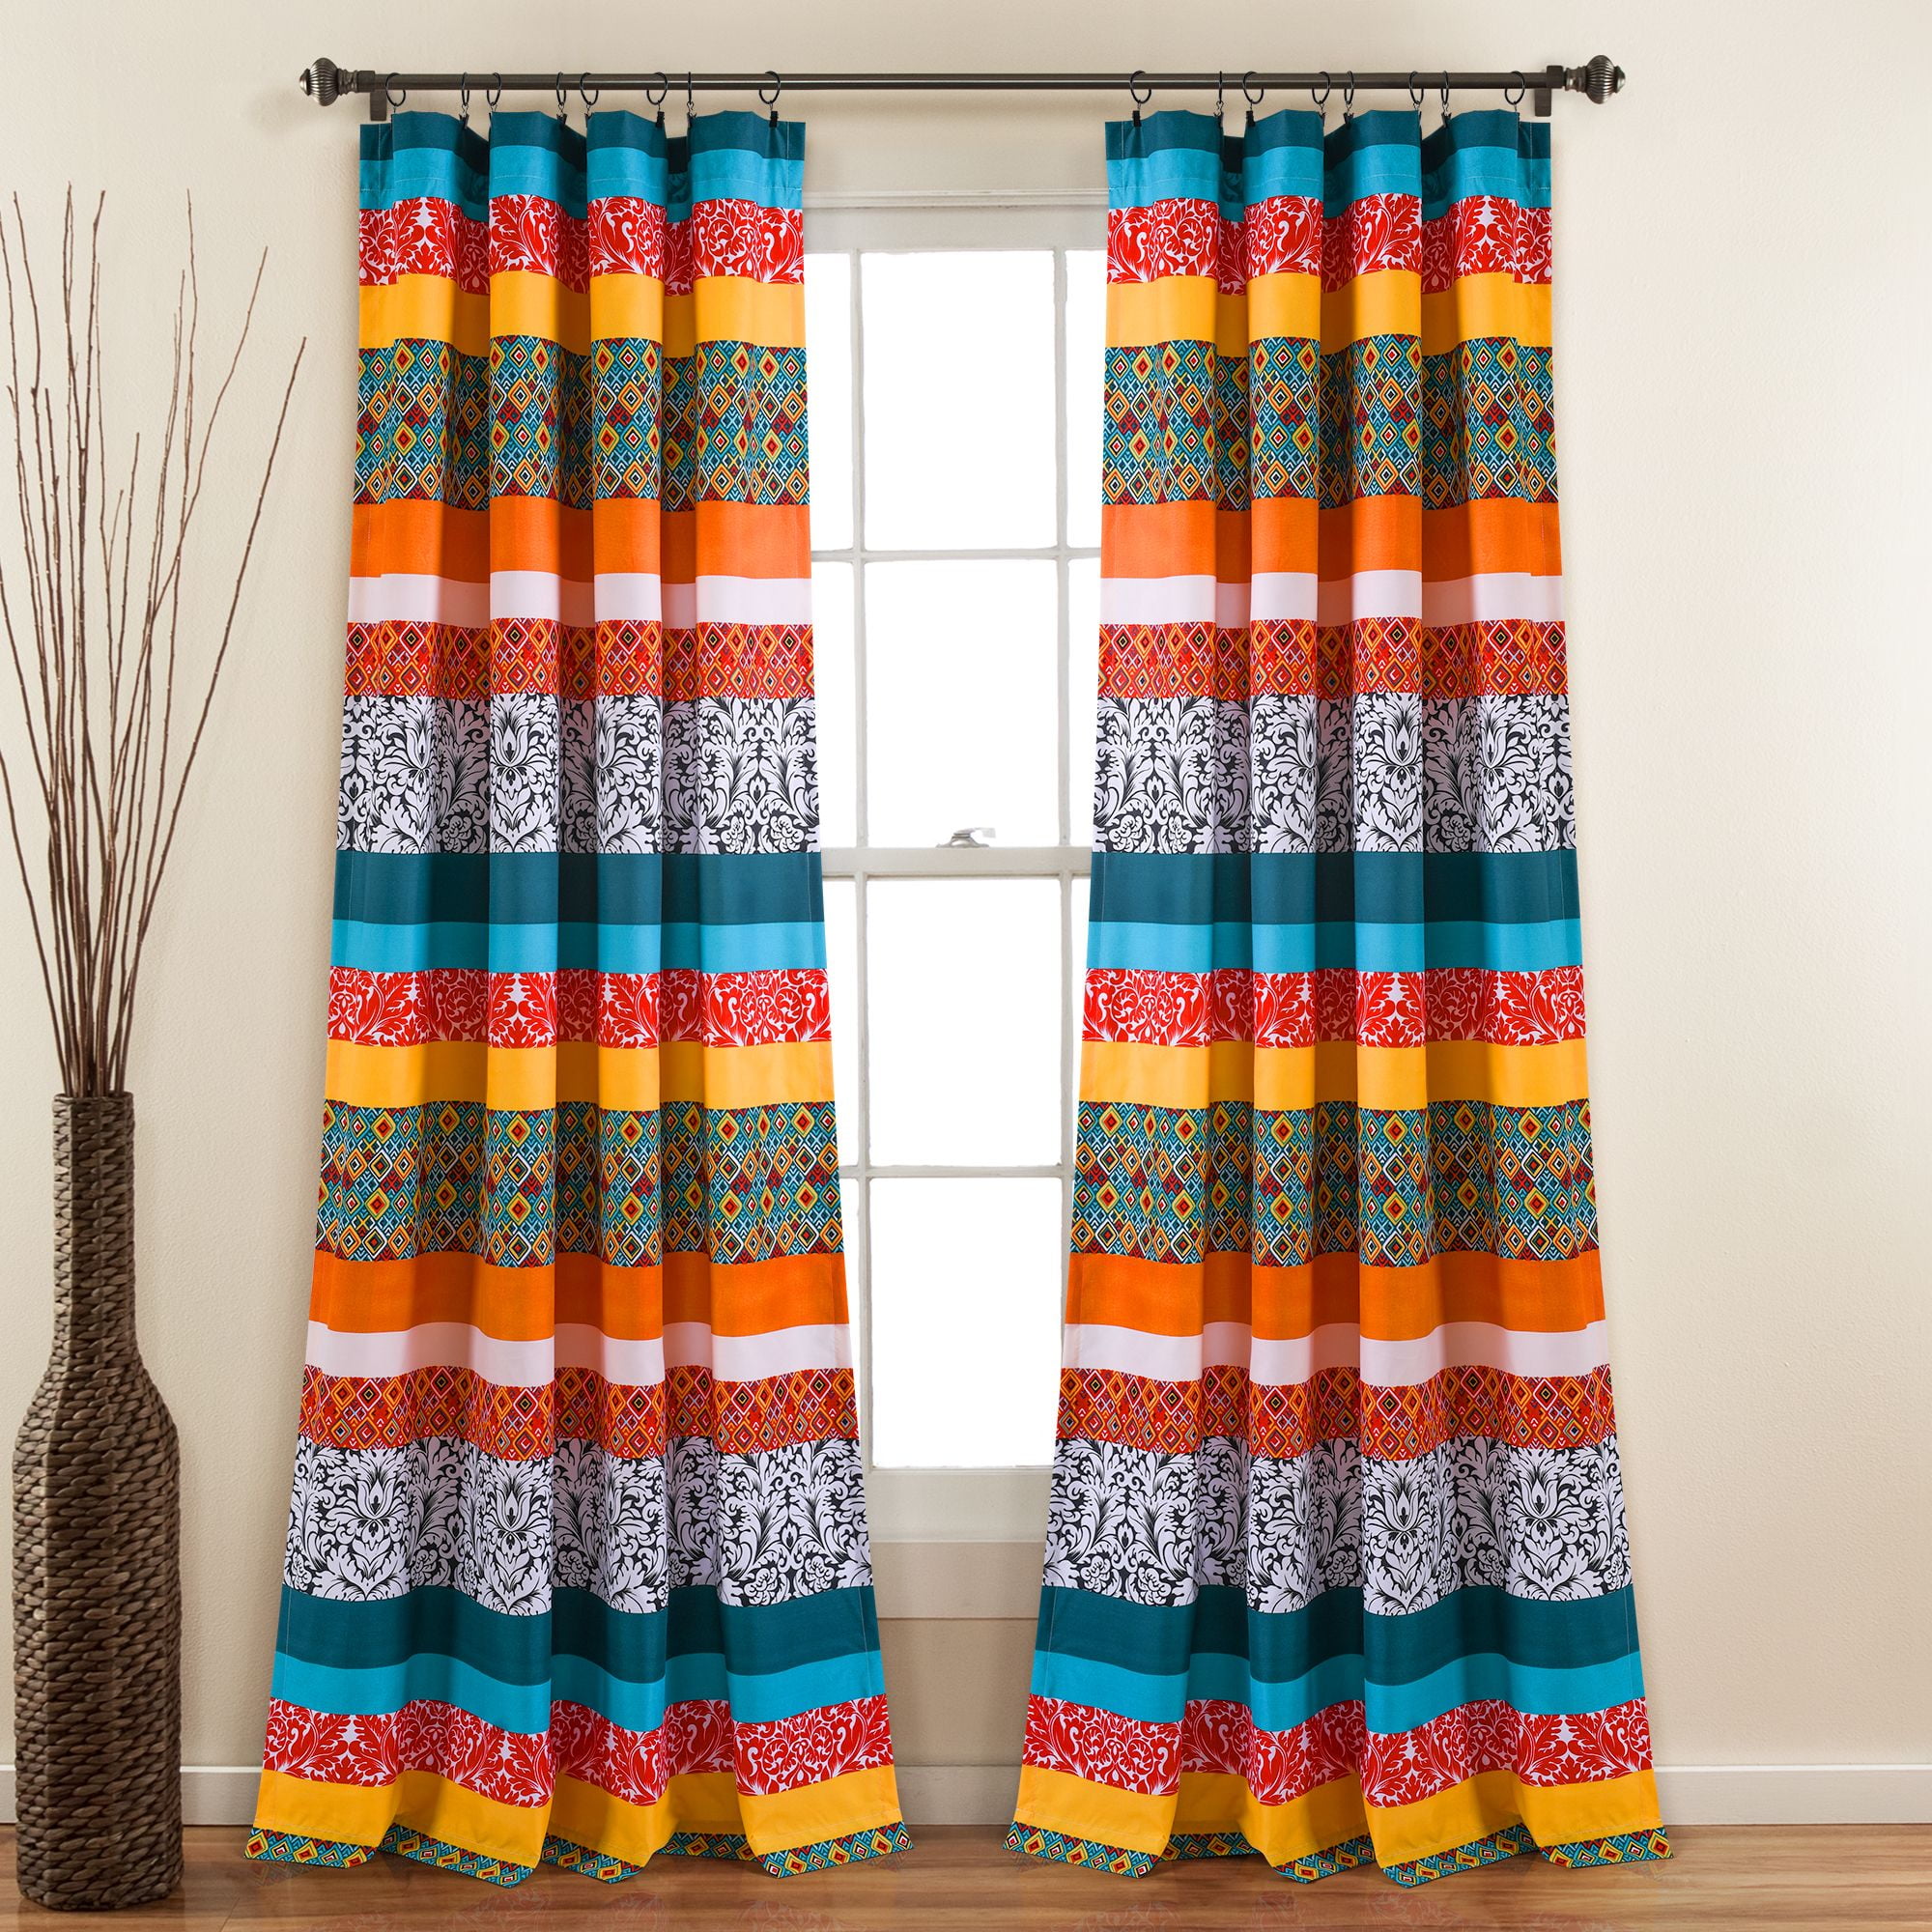 Details about   Boho Stripe Cotton Linen Curtains Living Room Bedroom Window Curtain Drape Decor 